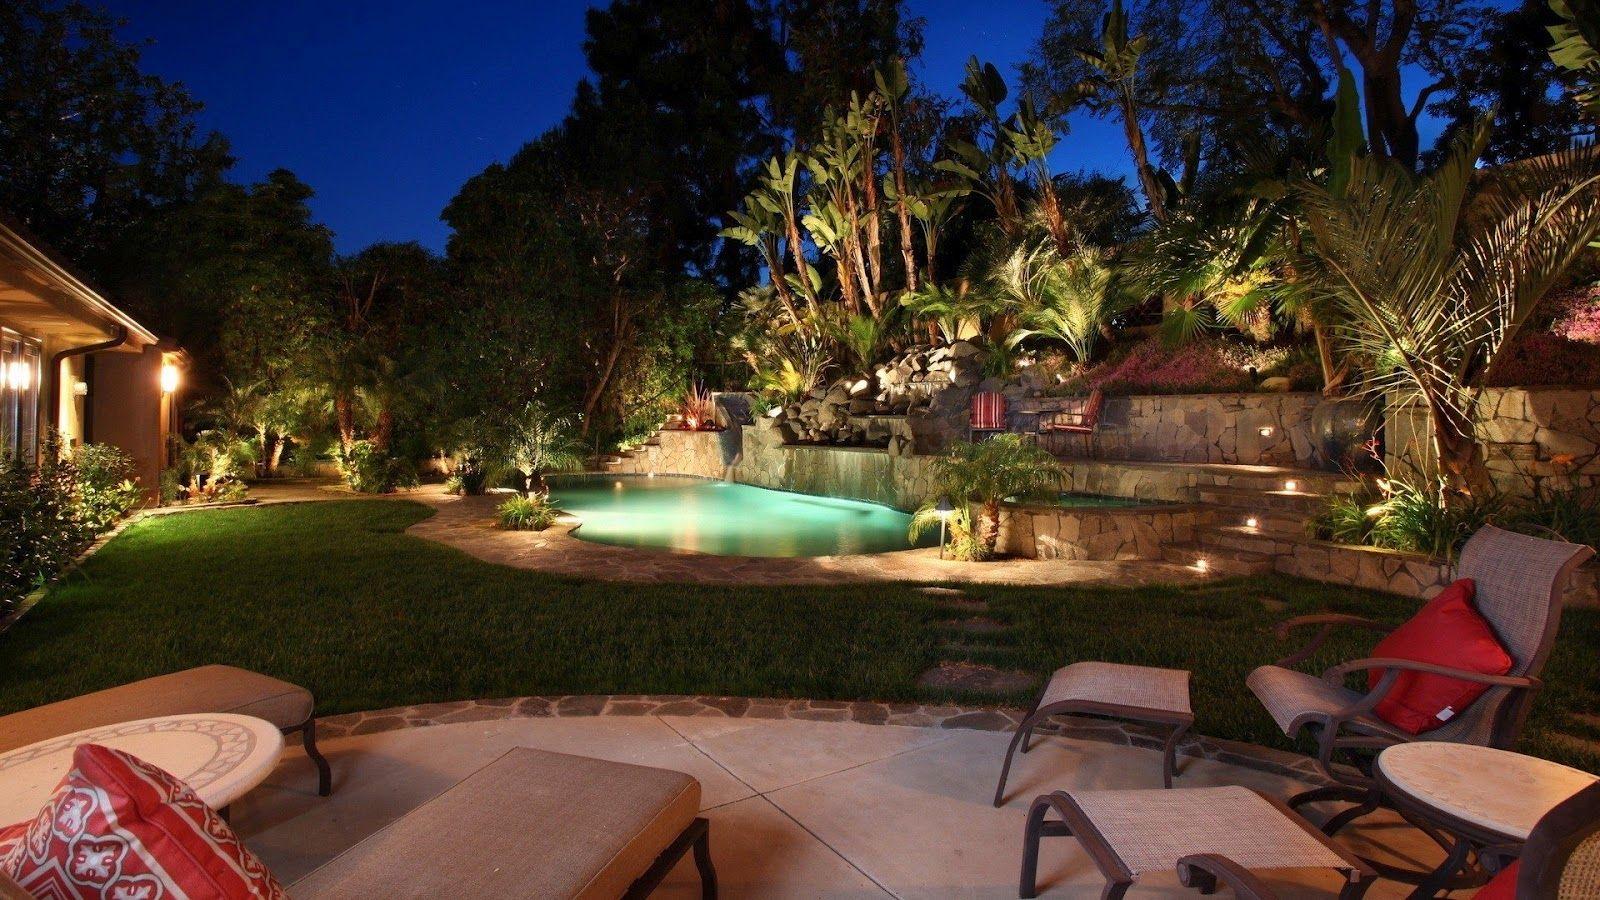 About Amazing Backyards Luxury Pools 2017 Including Image Pinkax.com